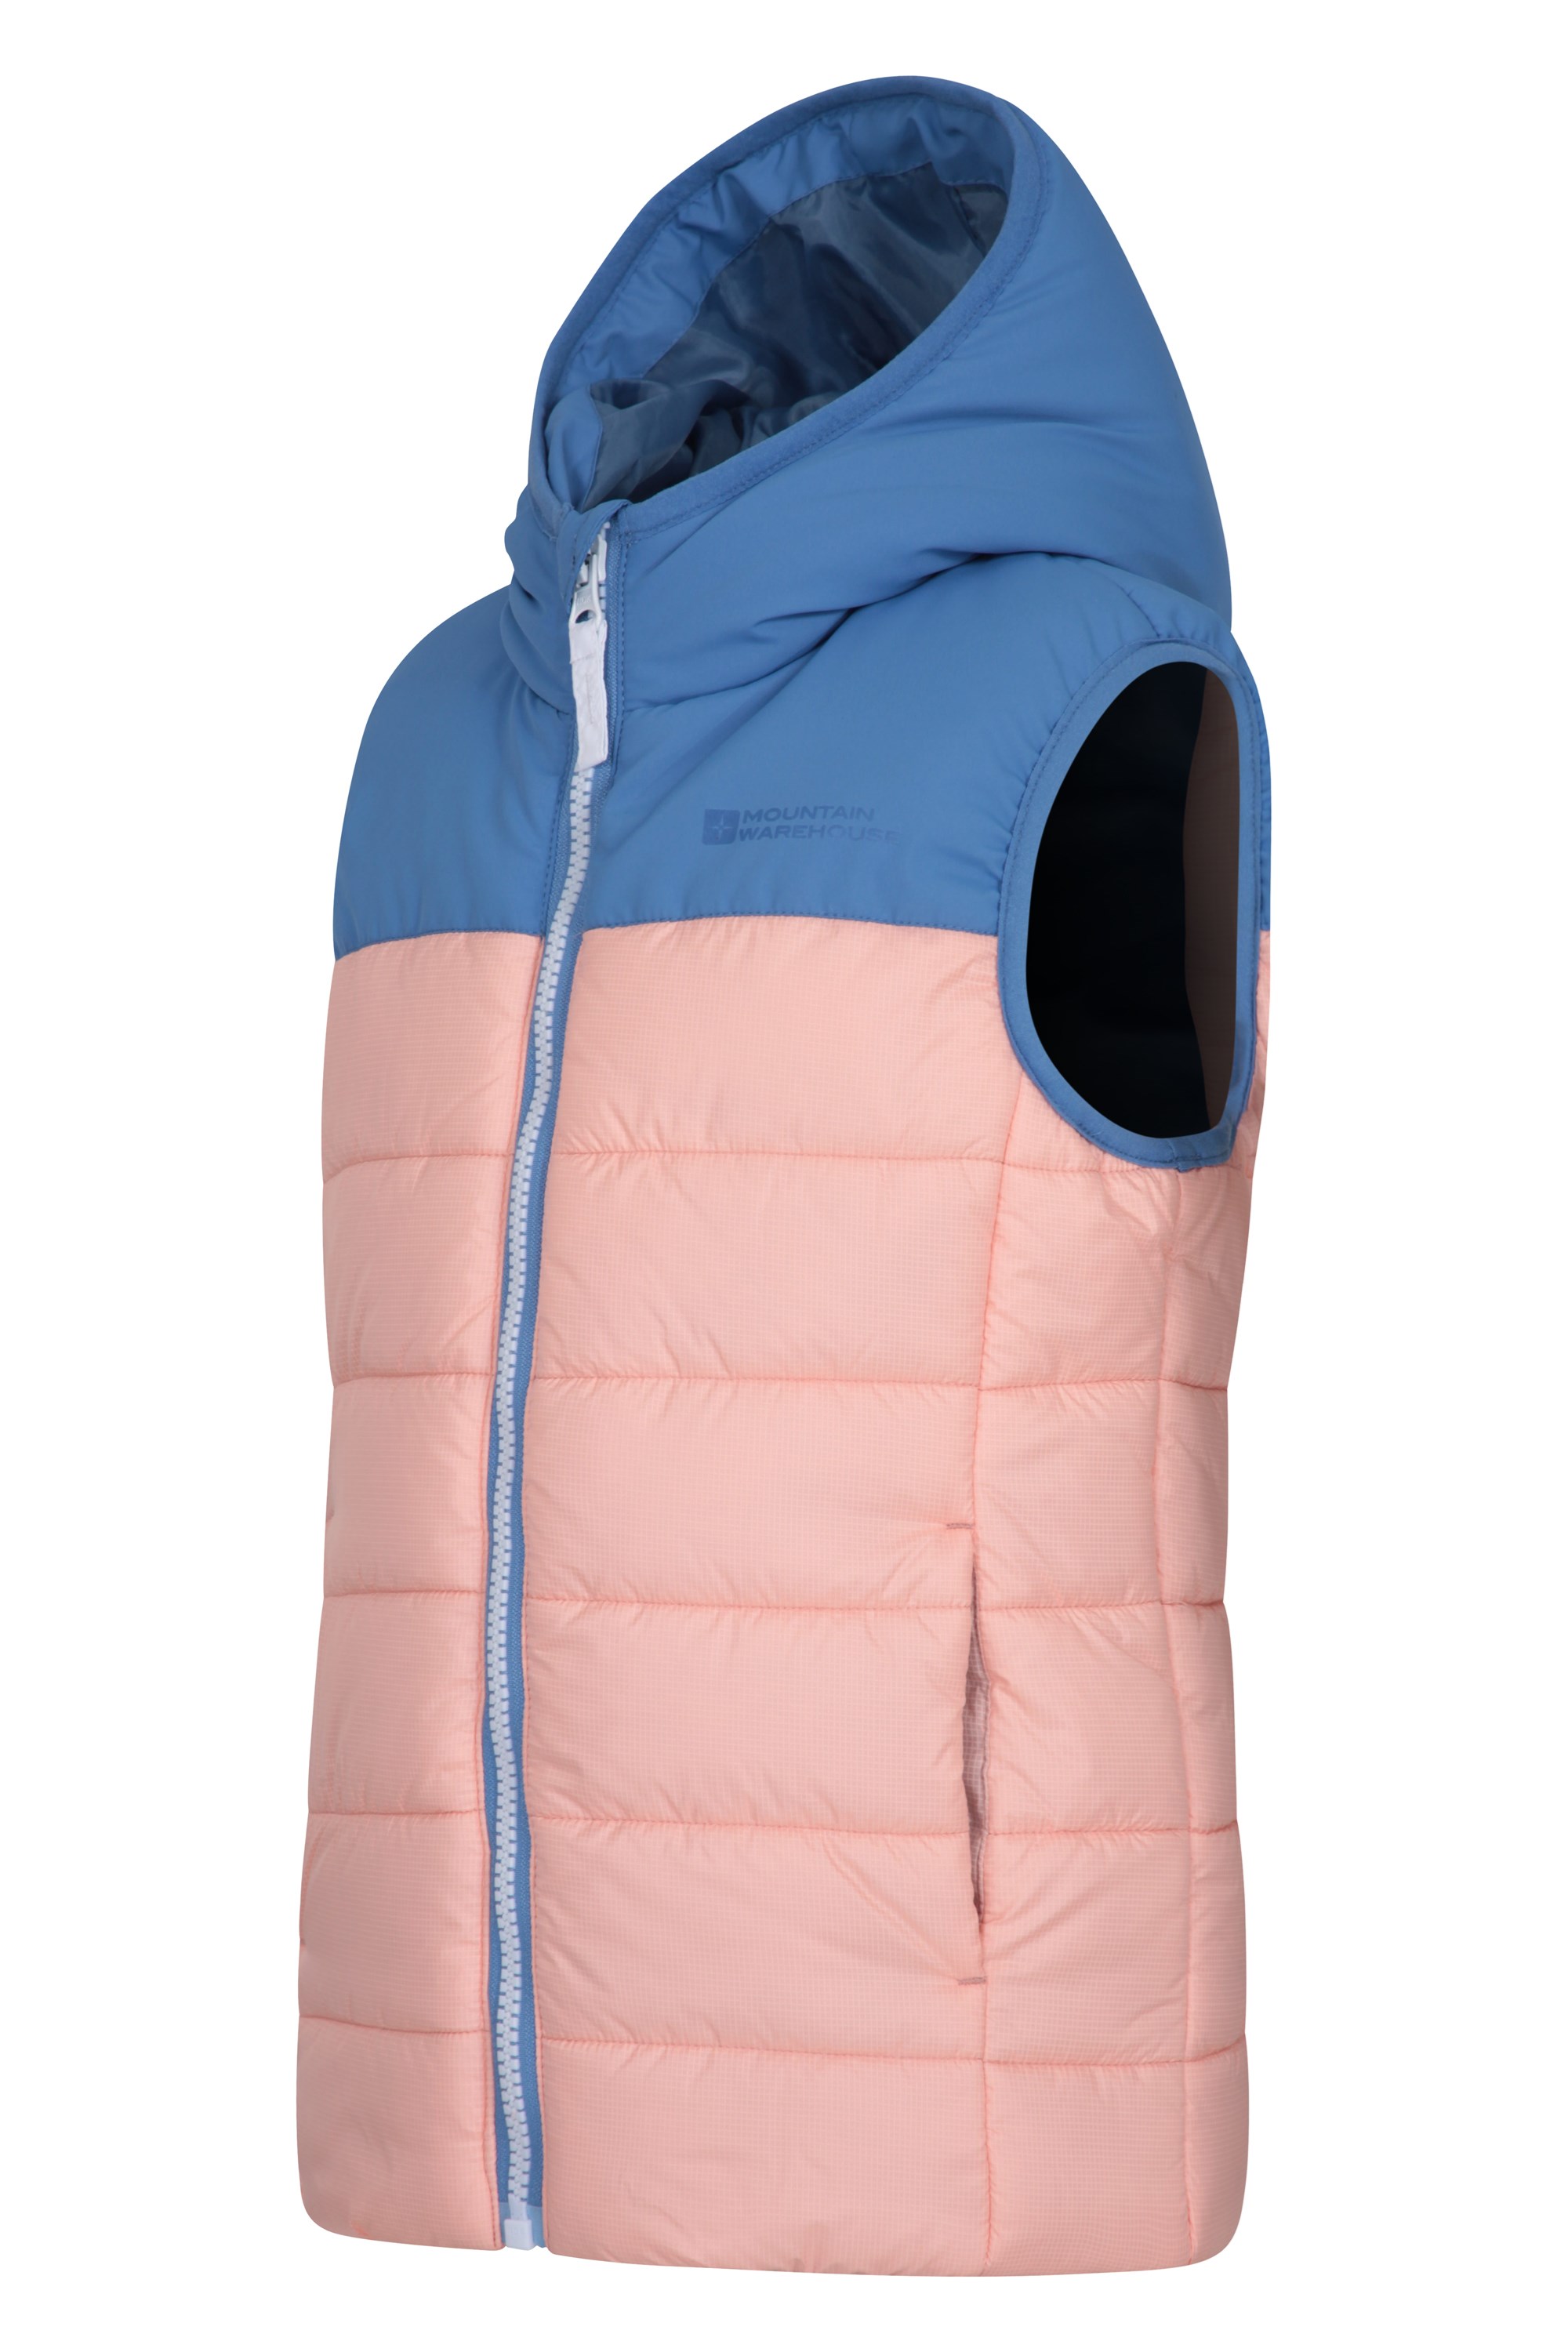 Mountain Warehouse Mountain Warehouse Kids Rocko Padded Gilet Body Warmer Vest Coat Insulated 